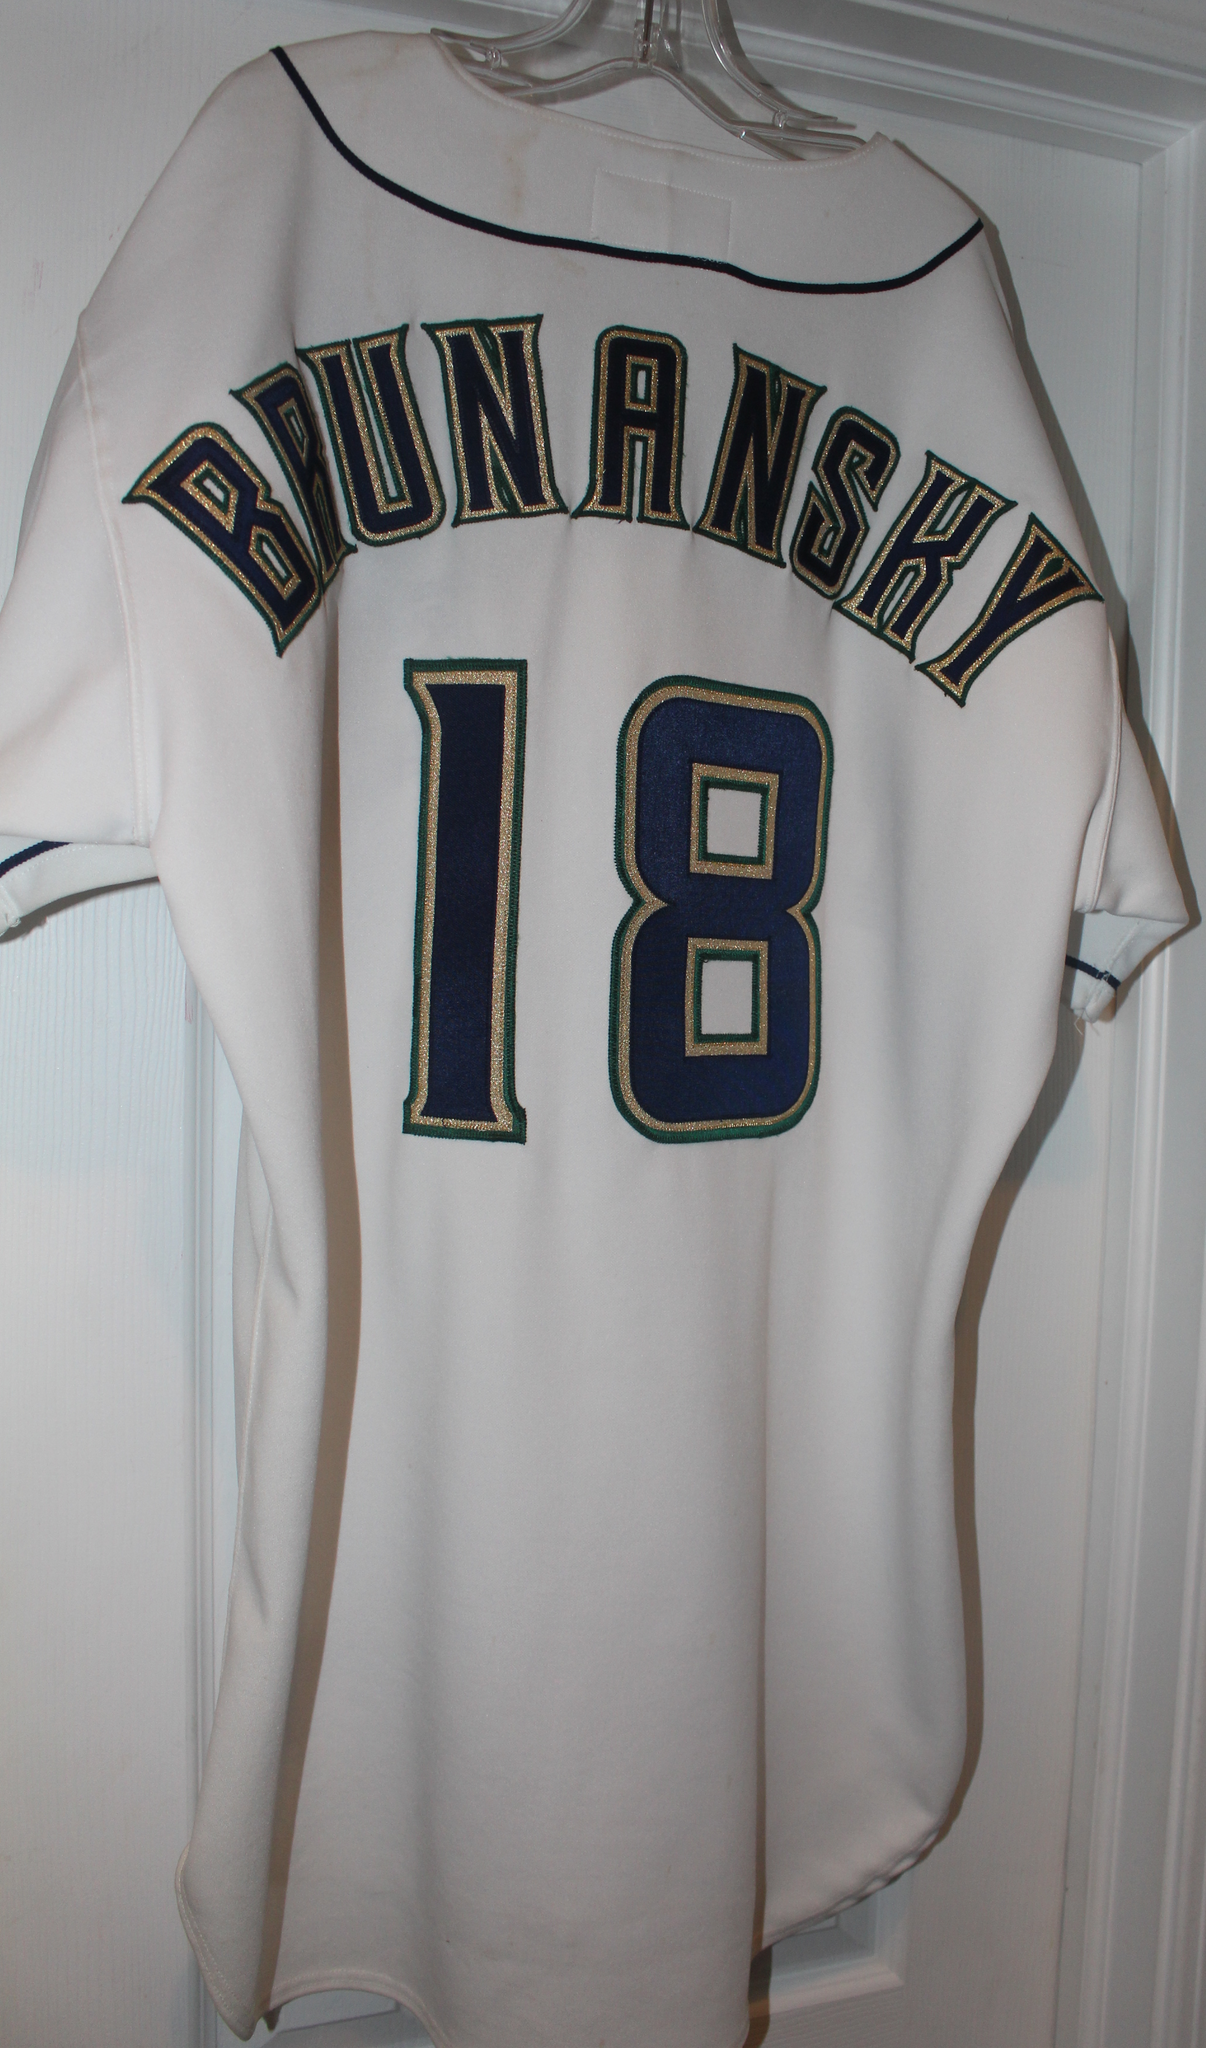 Lot - 1994 Tom Brunasky Milwaukee Brewers Game Used Baseball Jersey